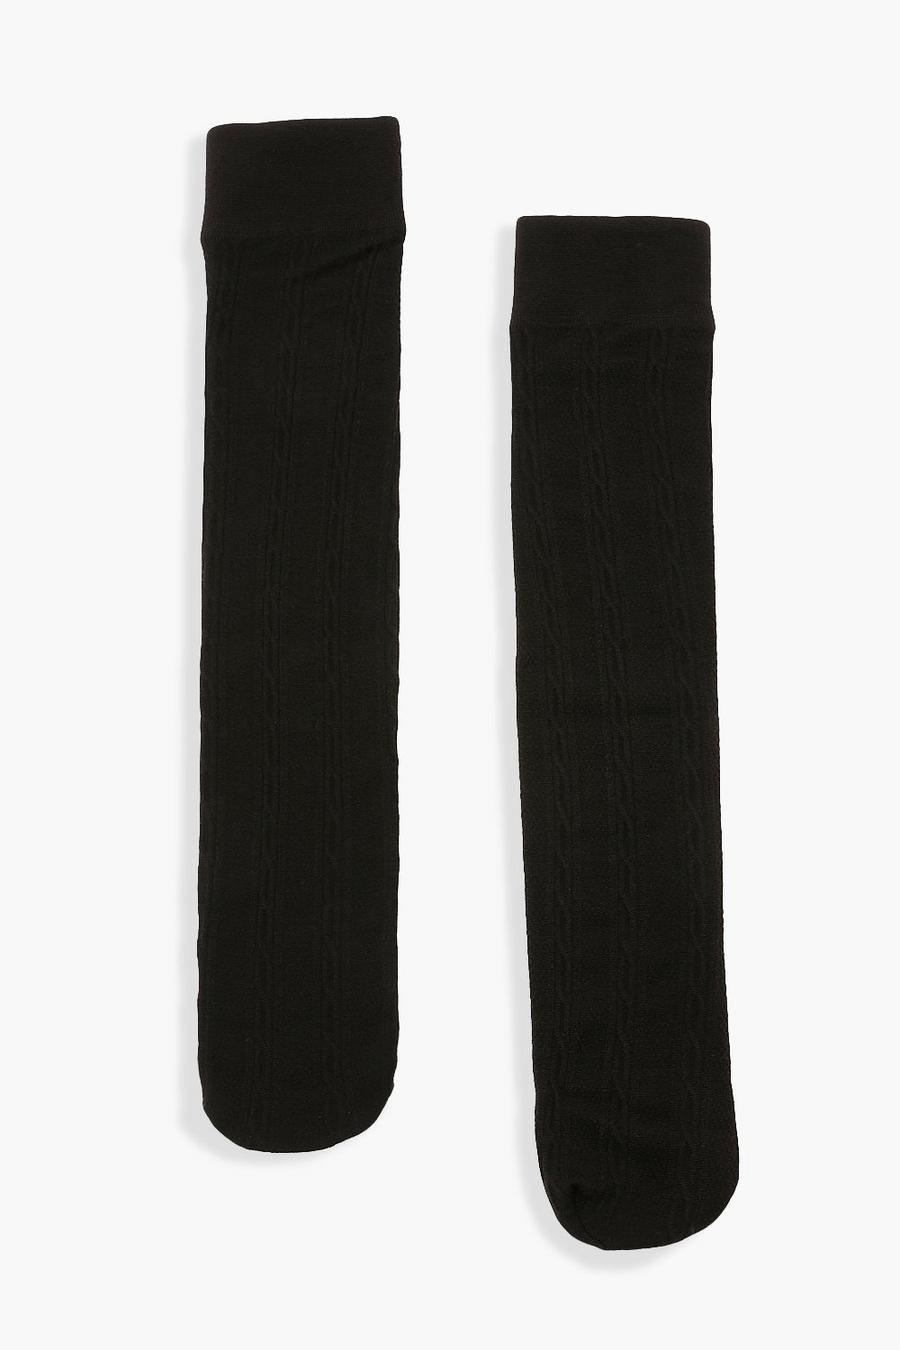 Black 2 Pack Thermal Cable Knit Knee High Socks image number 1